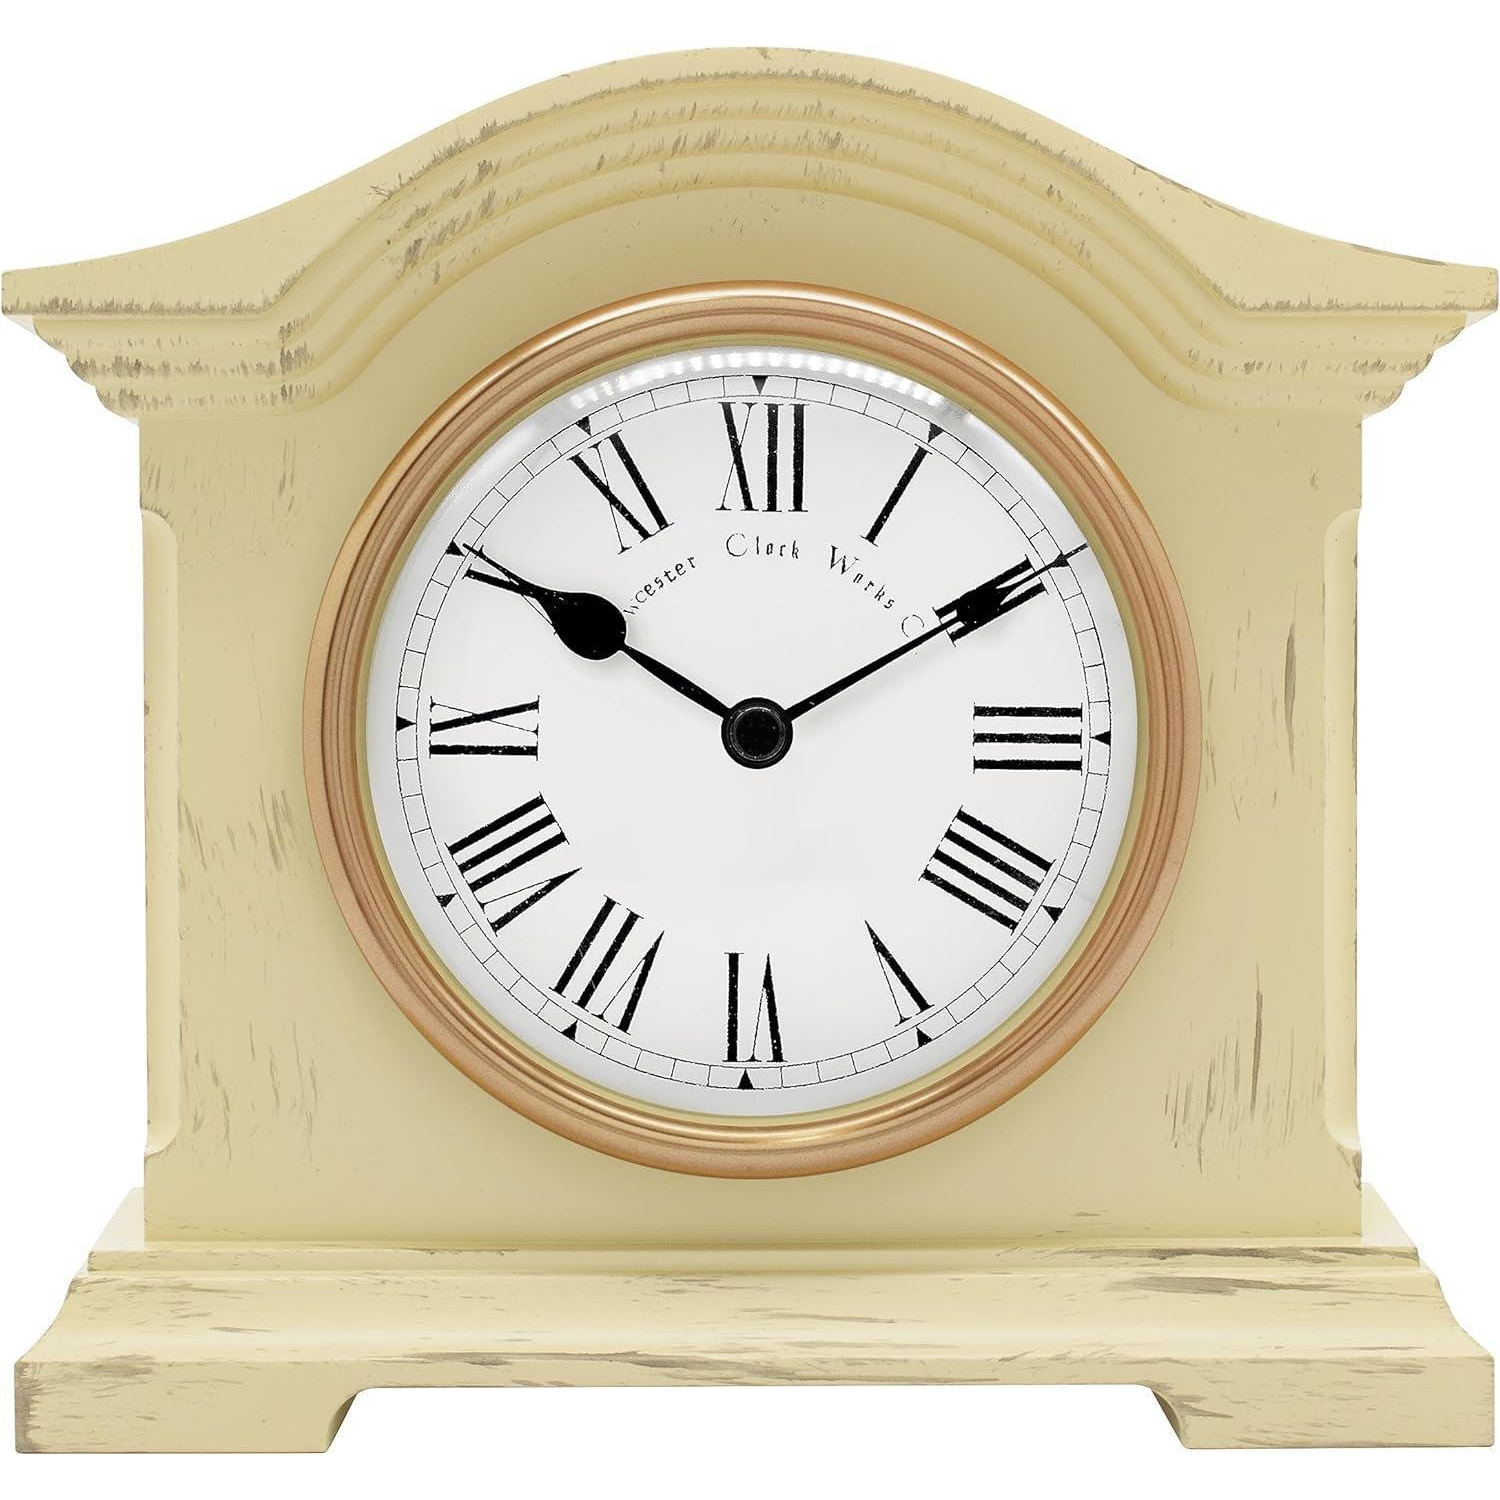 Falkenburg Mantel Clock Quartz Mechanism Distressed Finish - image 1